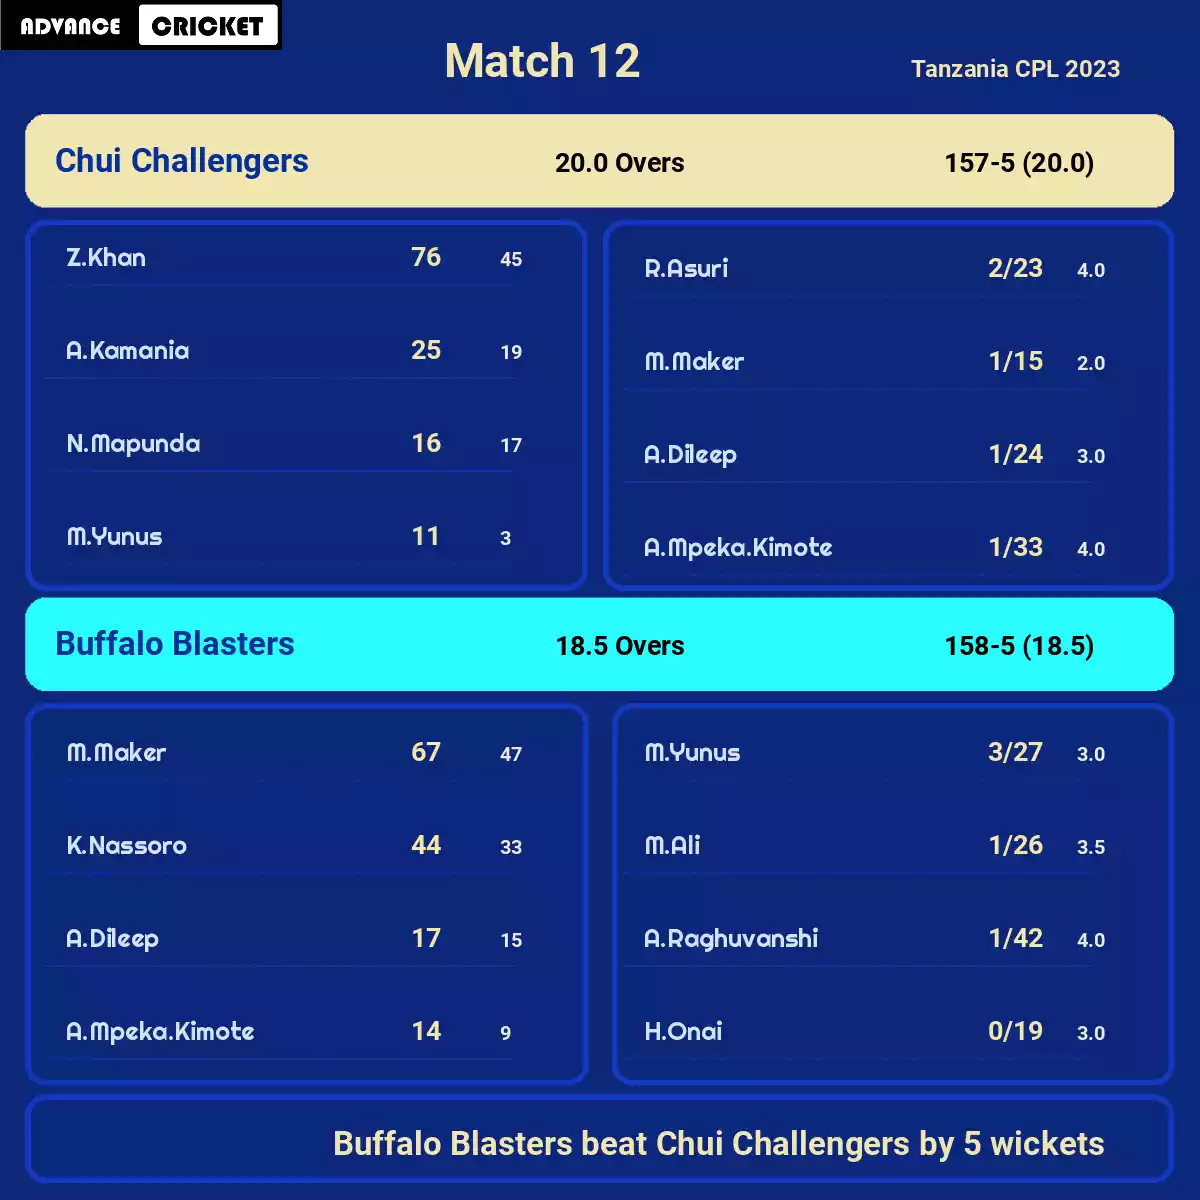 BUB vs CC Match 12 Tanzania CPL 2023